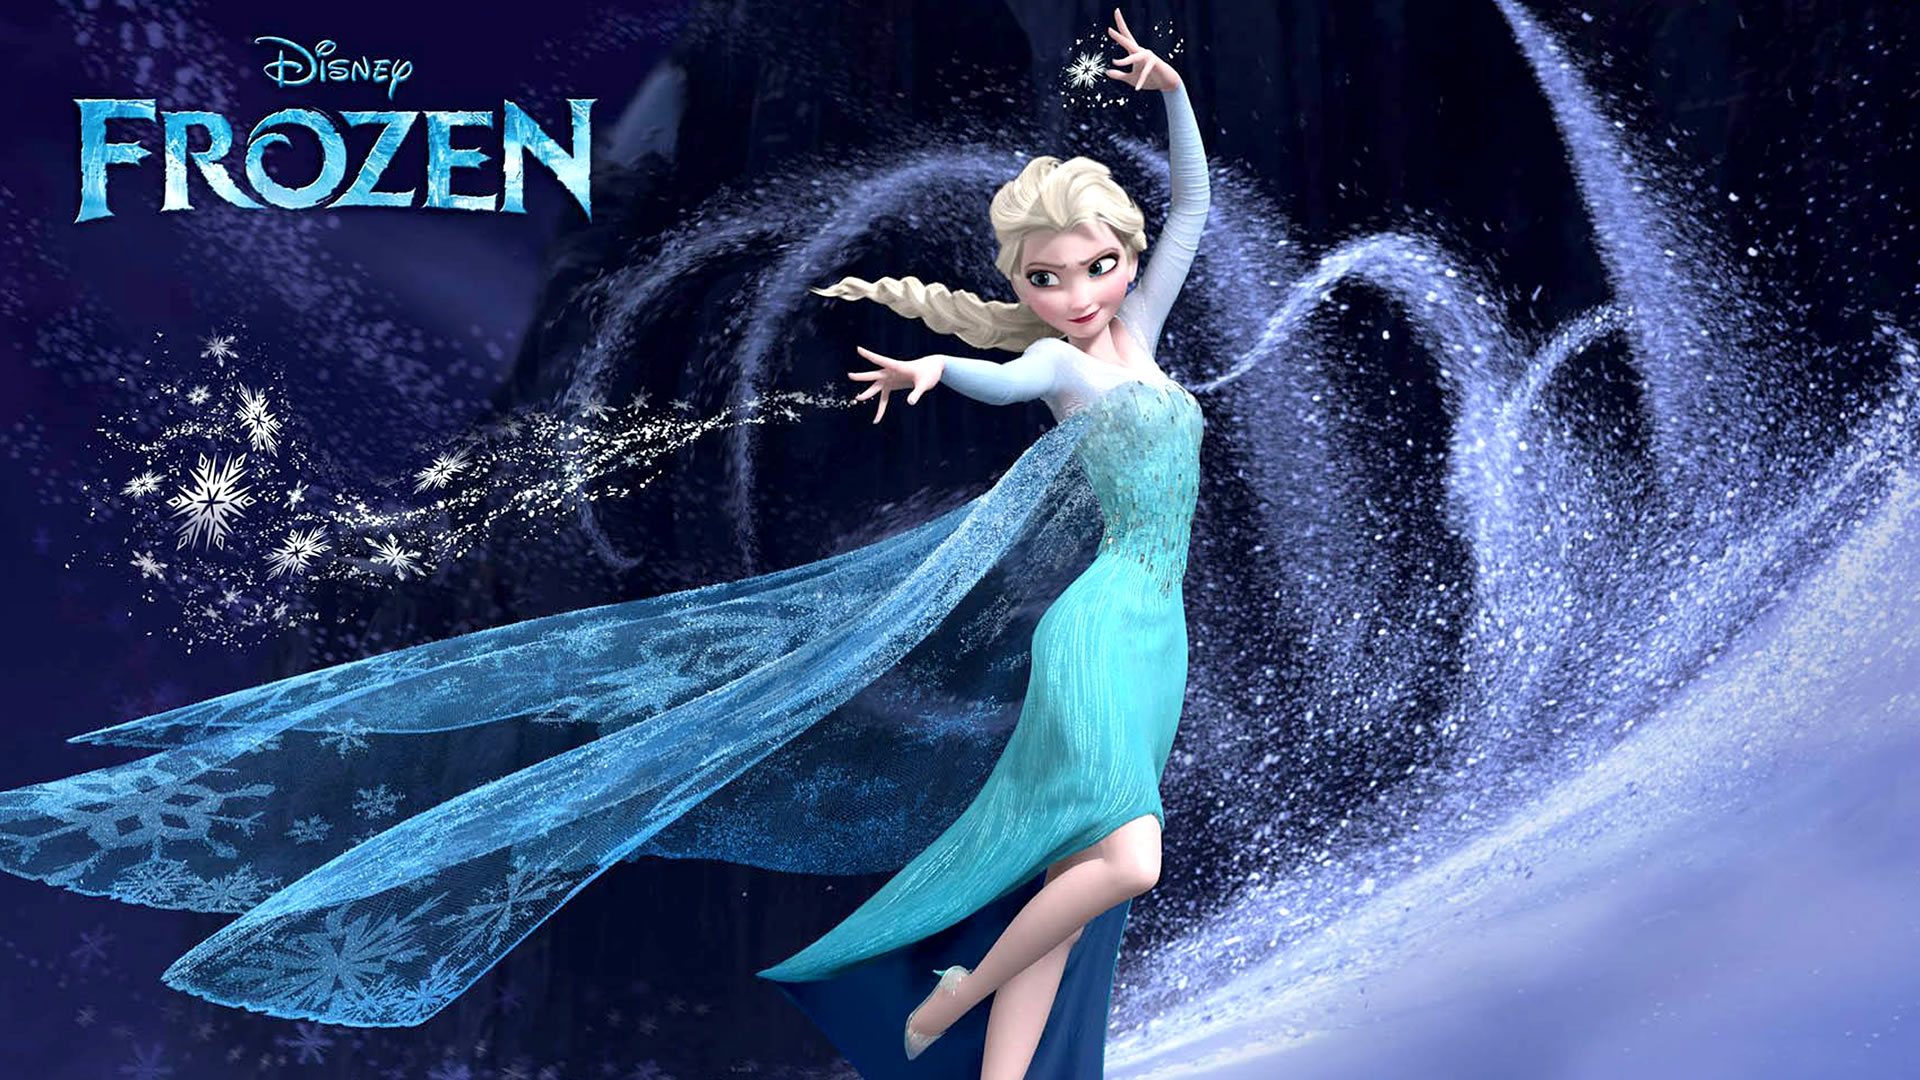 download wallpaper: Frozen – sneeuwkoningin Elsa wallpaper